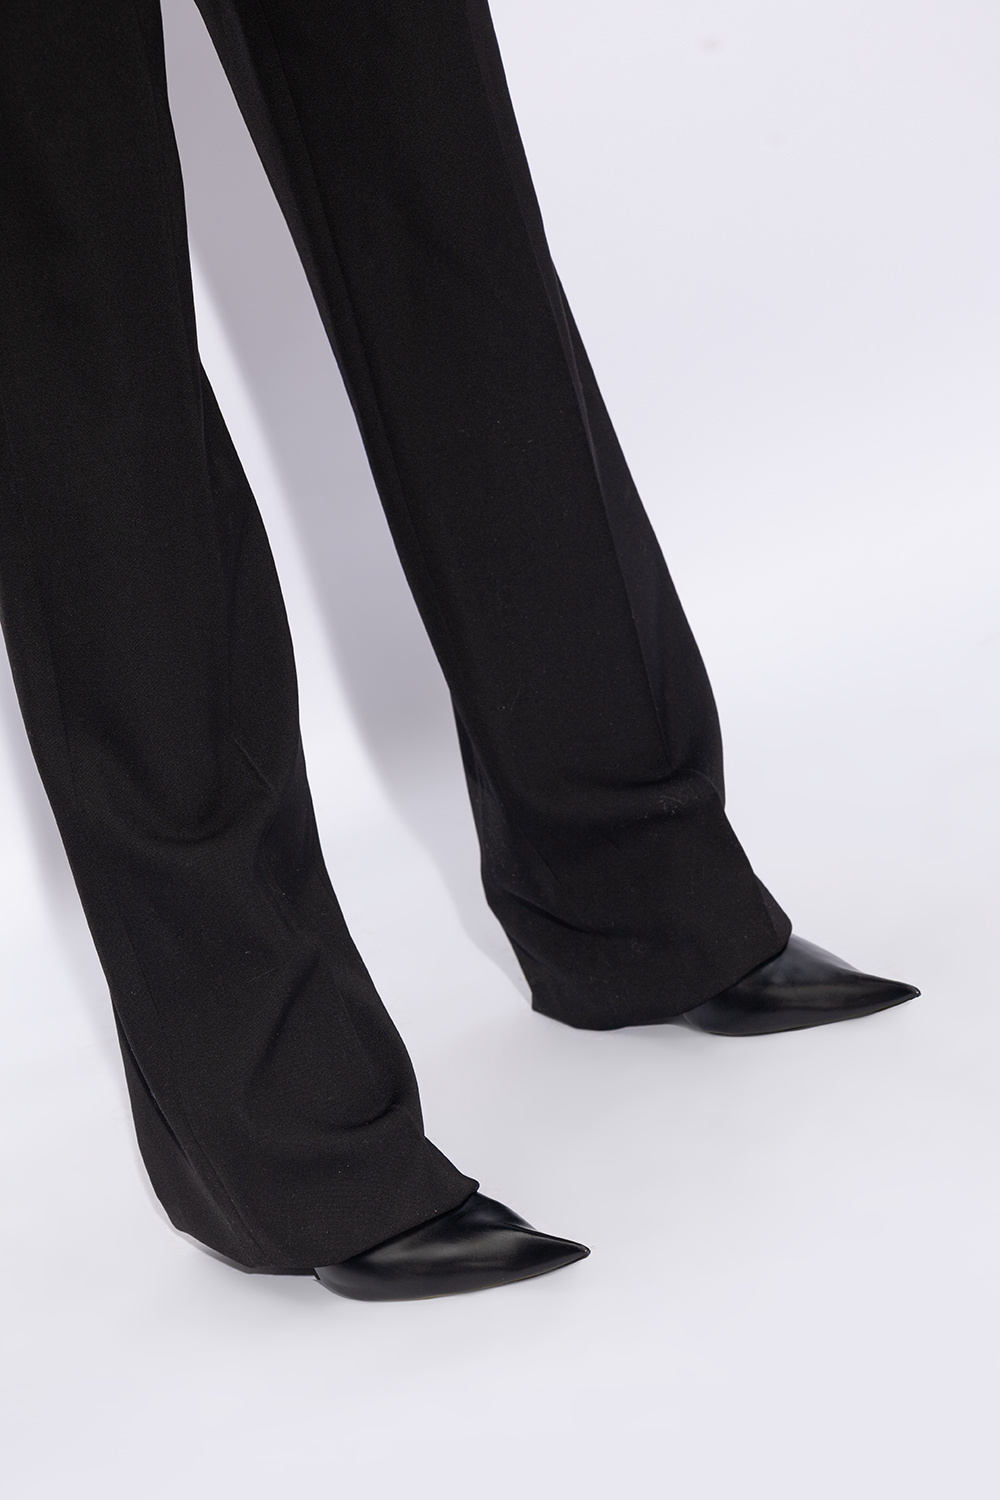 Balenciaga ‘Hourglass’ heeled ankle boots